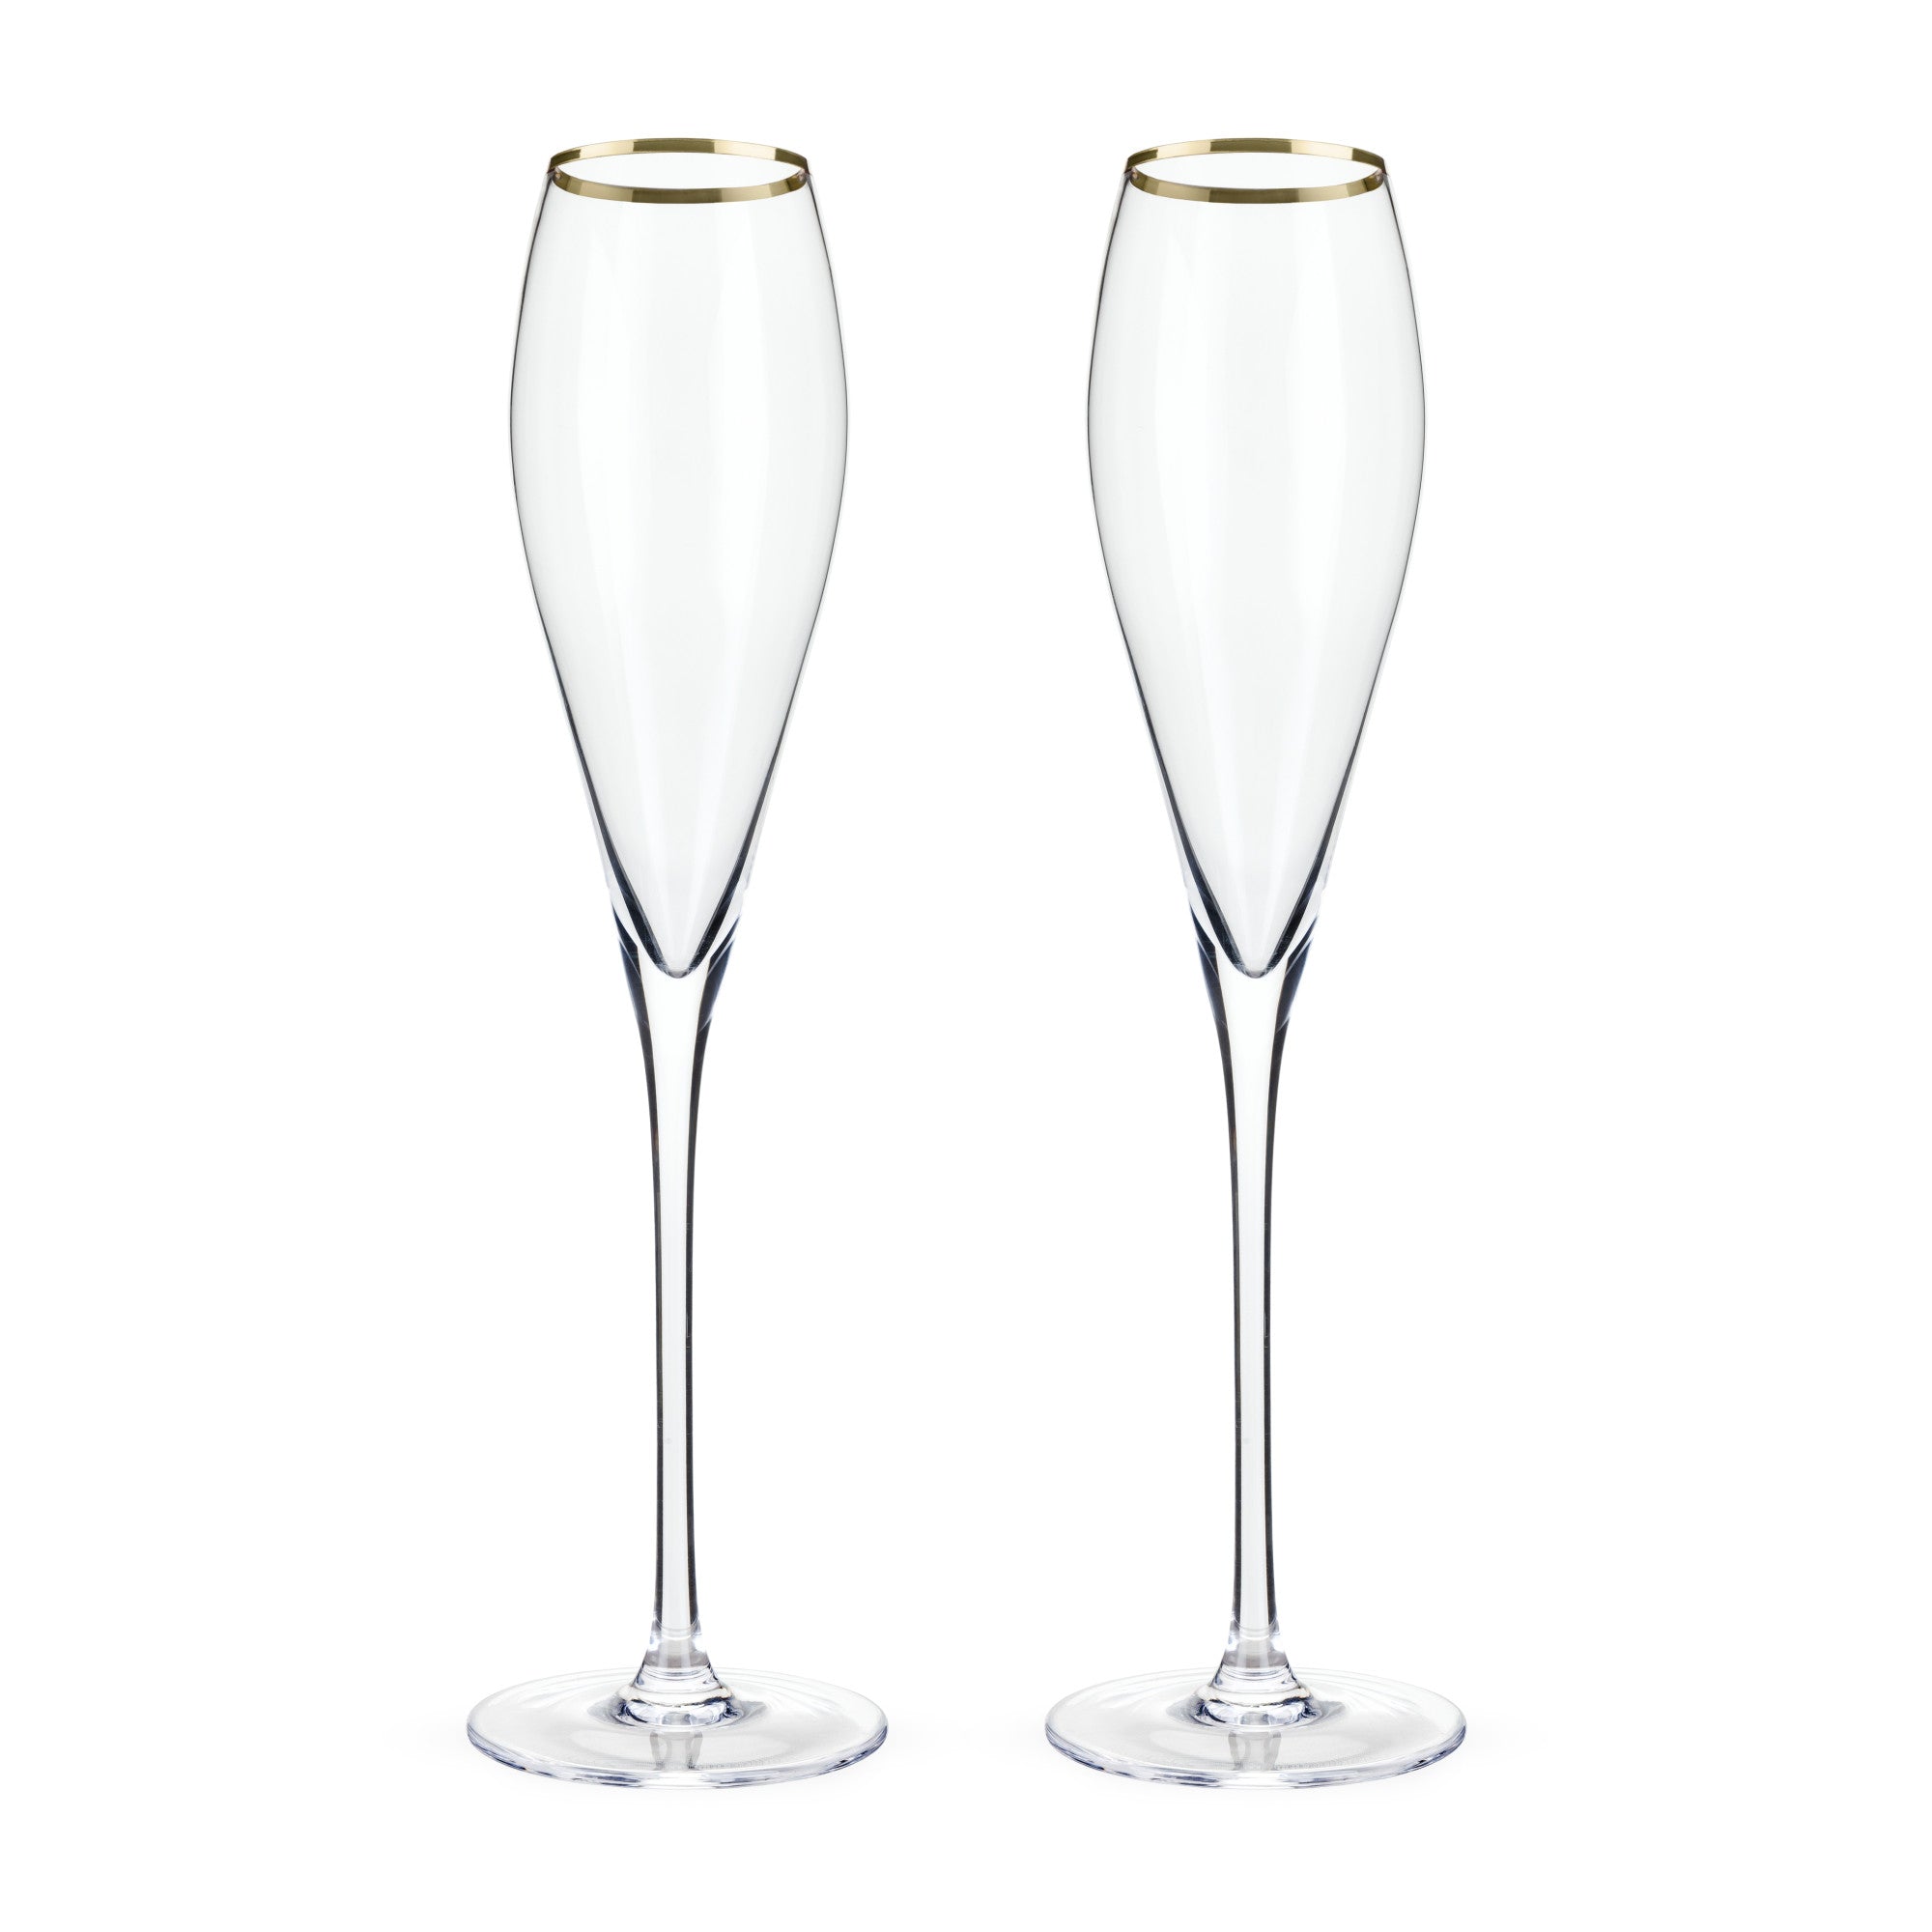 Viski Raye Angled Crystal Champagne Flutes Set Of 2 - Premium